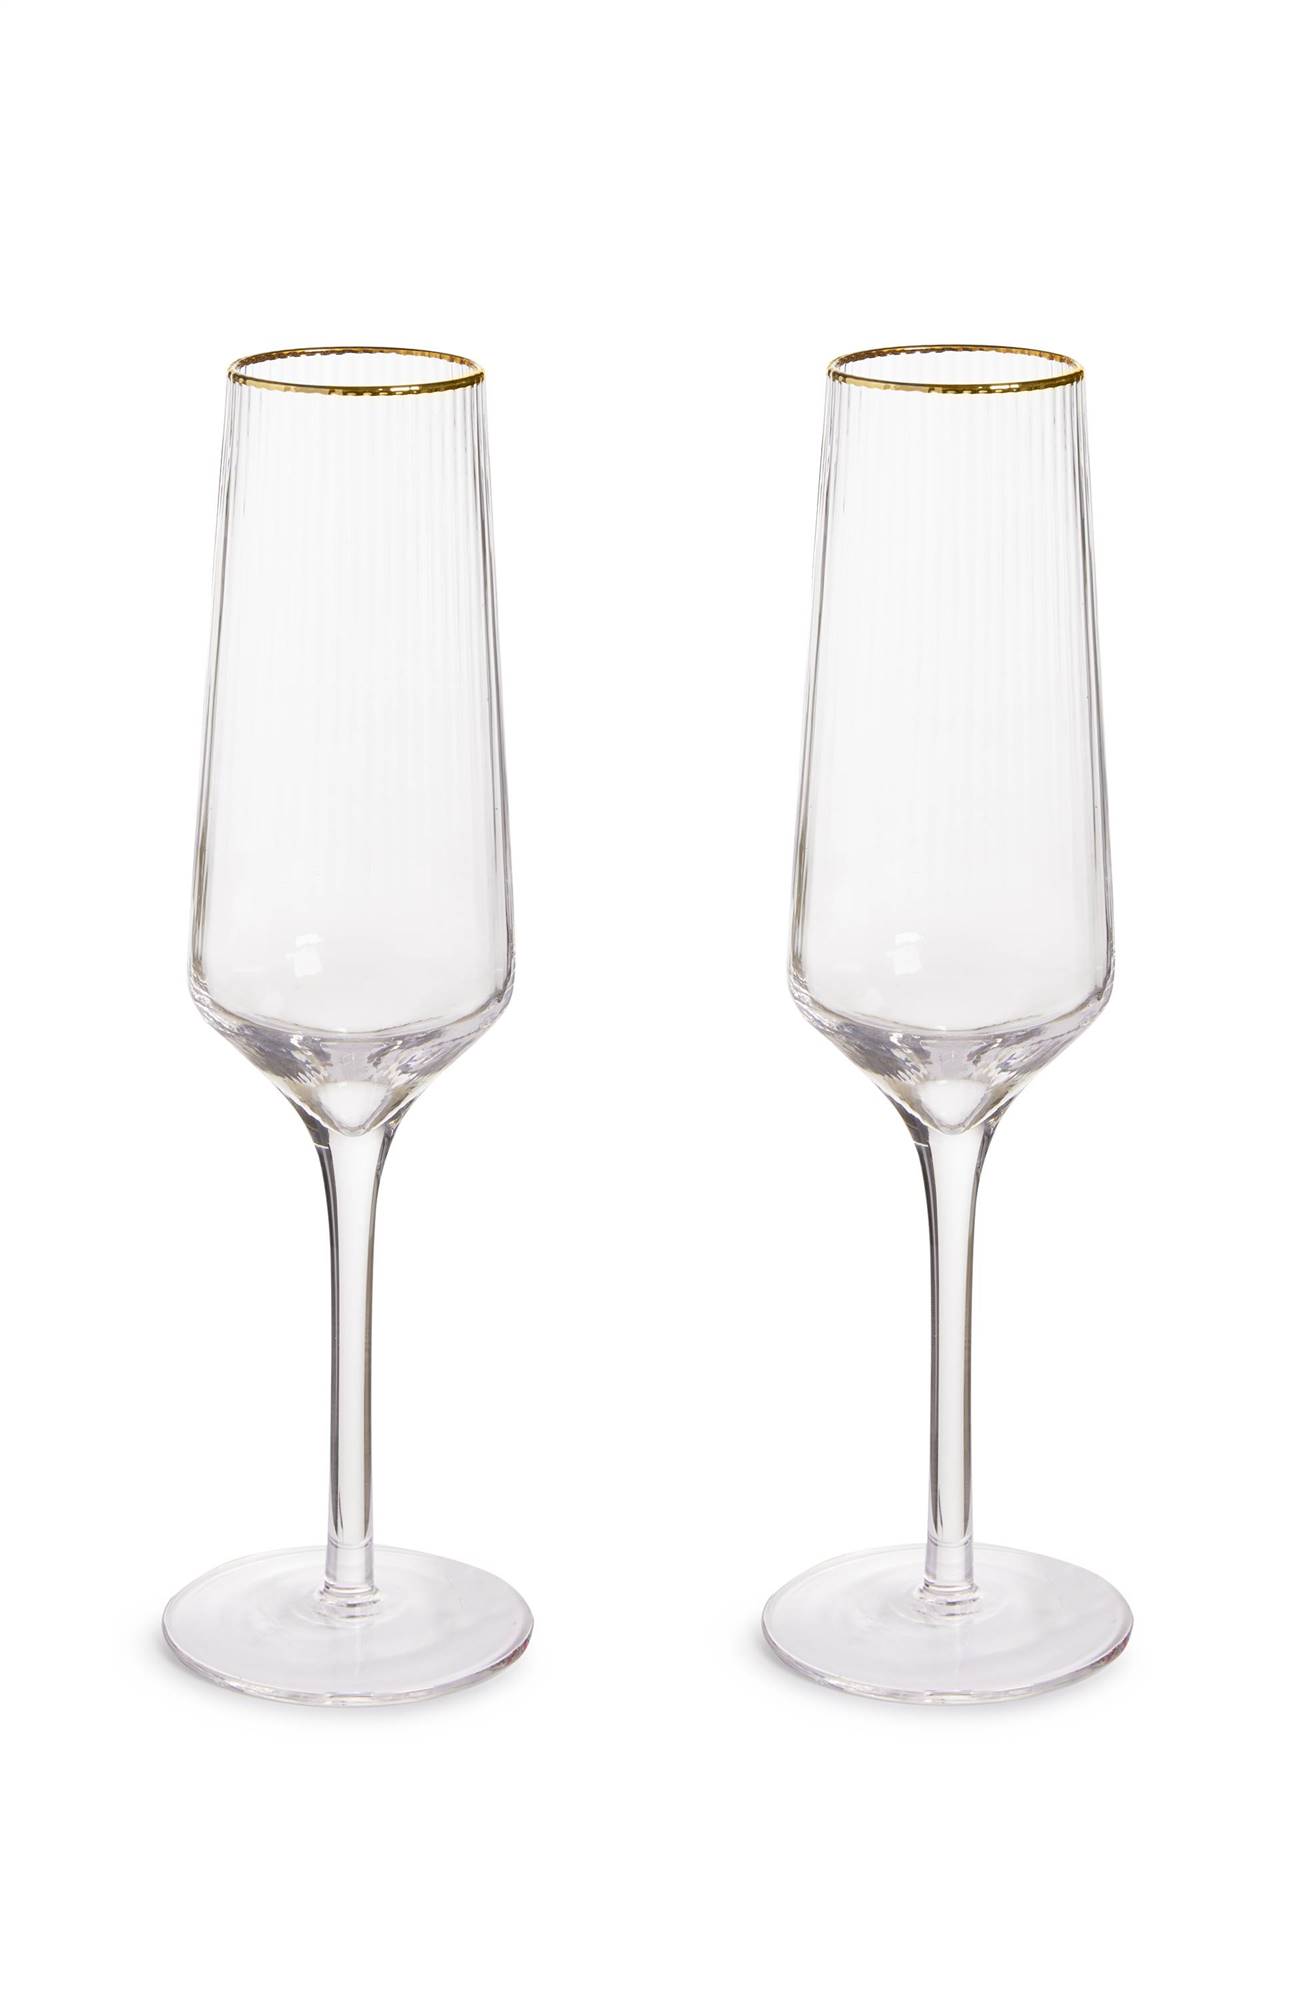 KIMBALL-0244201-01-Xnov 2Pk Champagne Glass £7 €8 9 PLN34